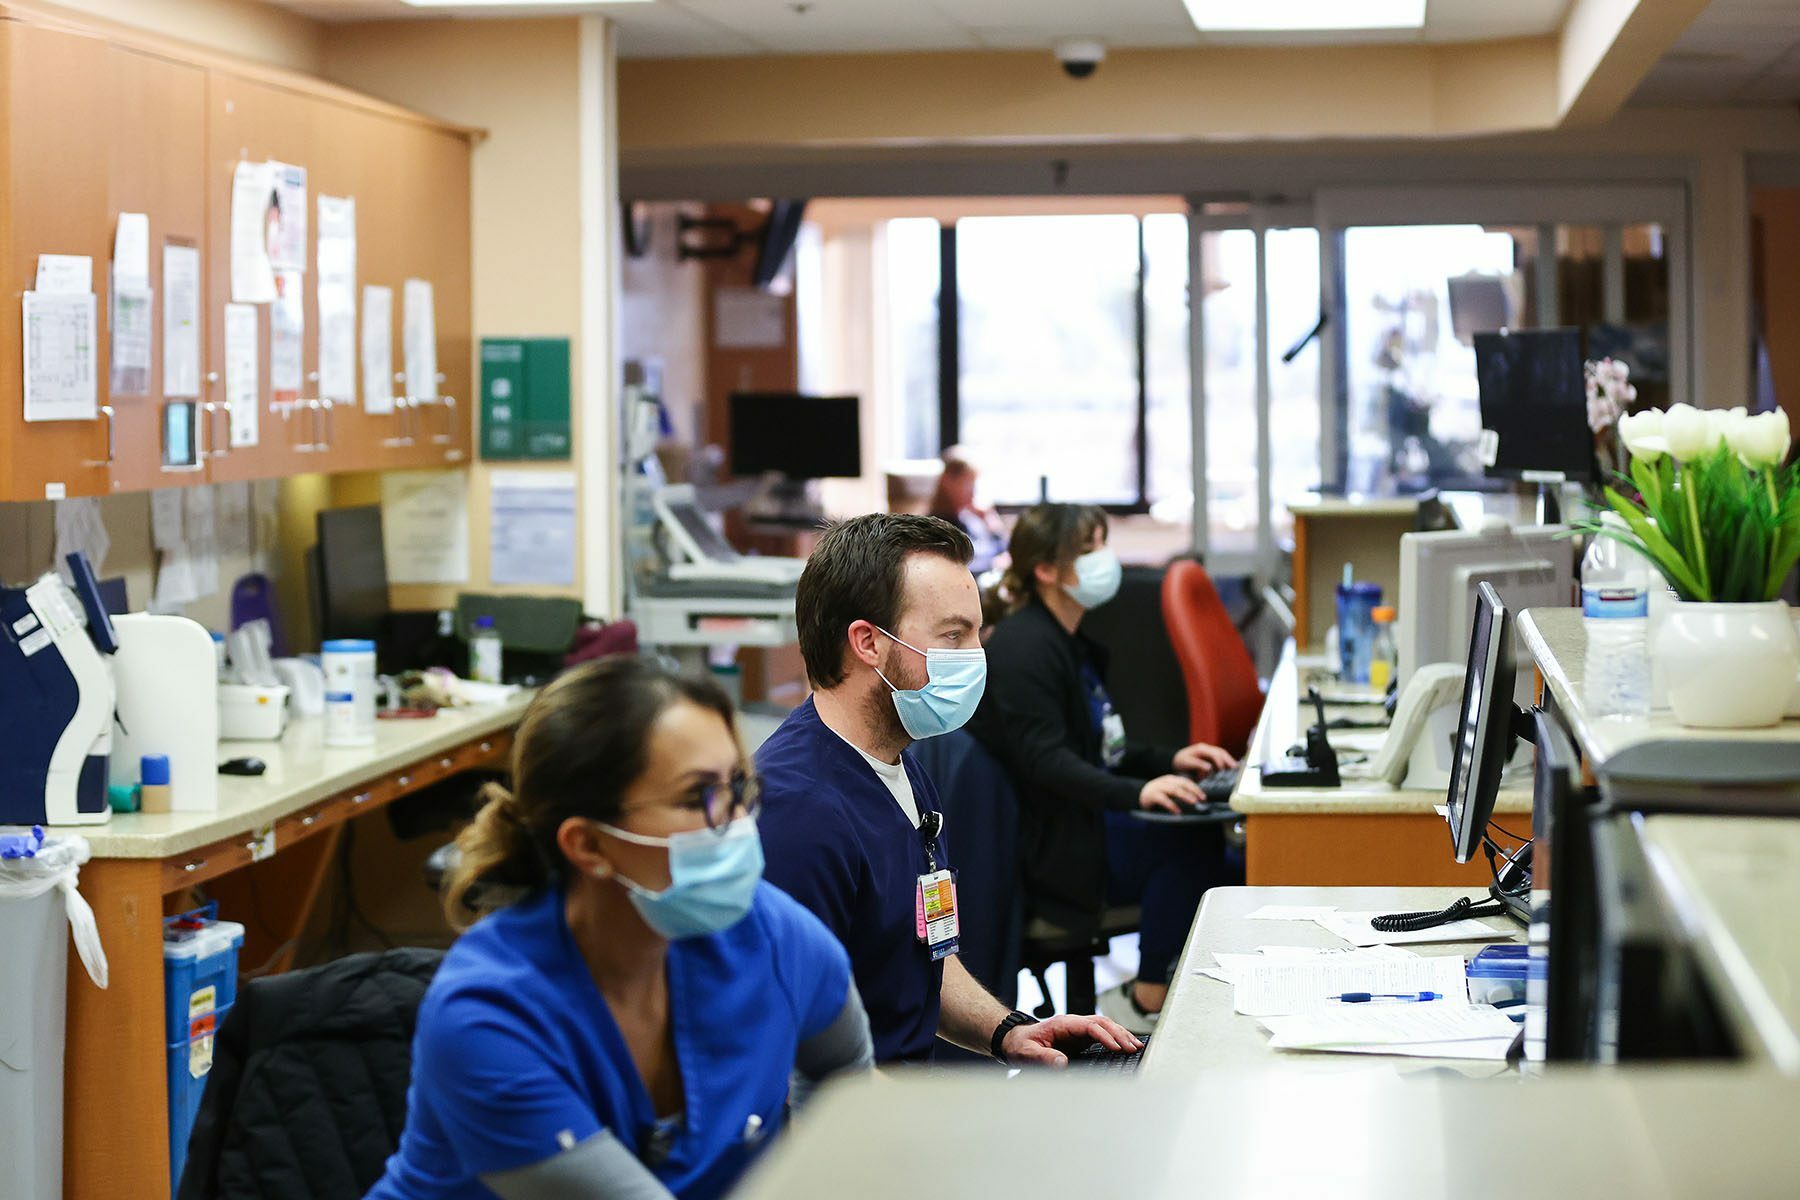 ICU nurses are seen working behind a reception desk.